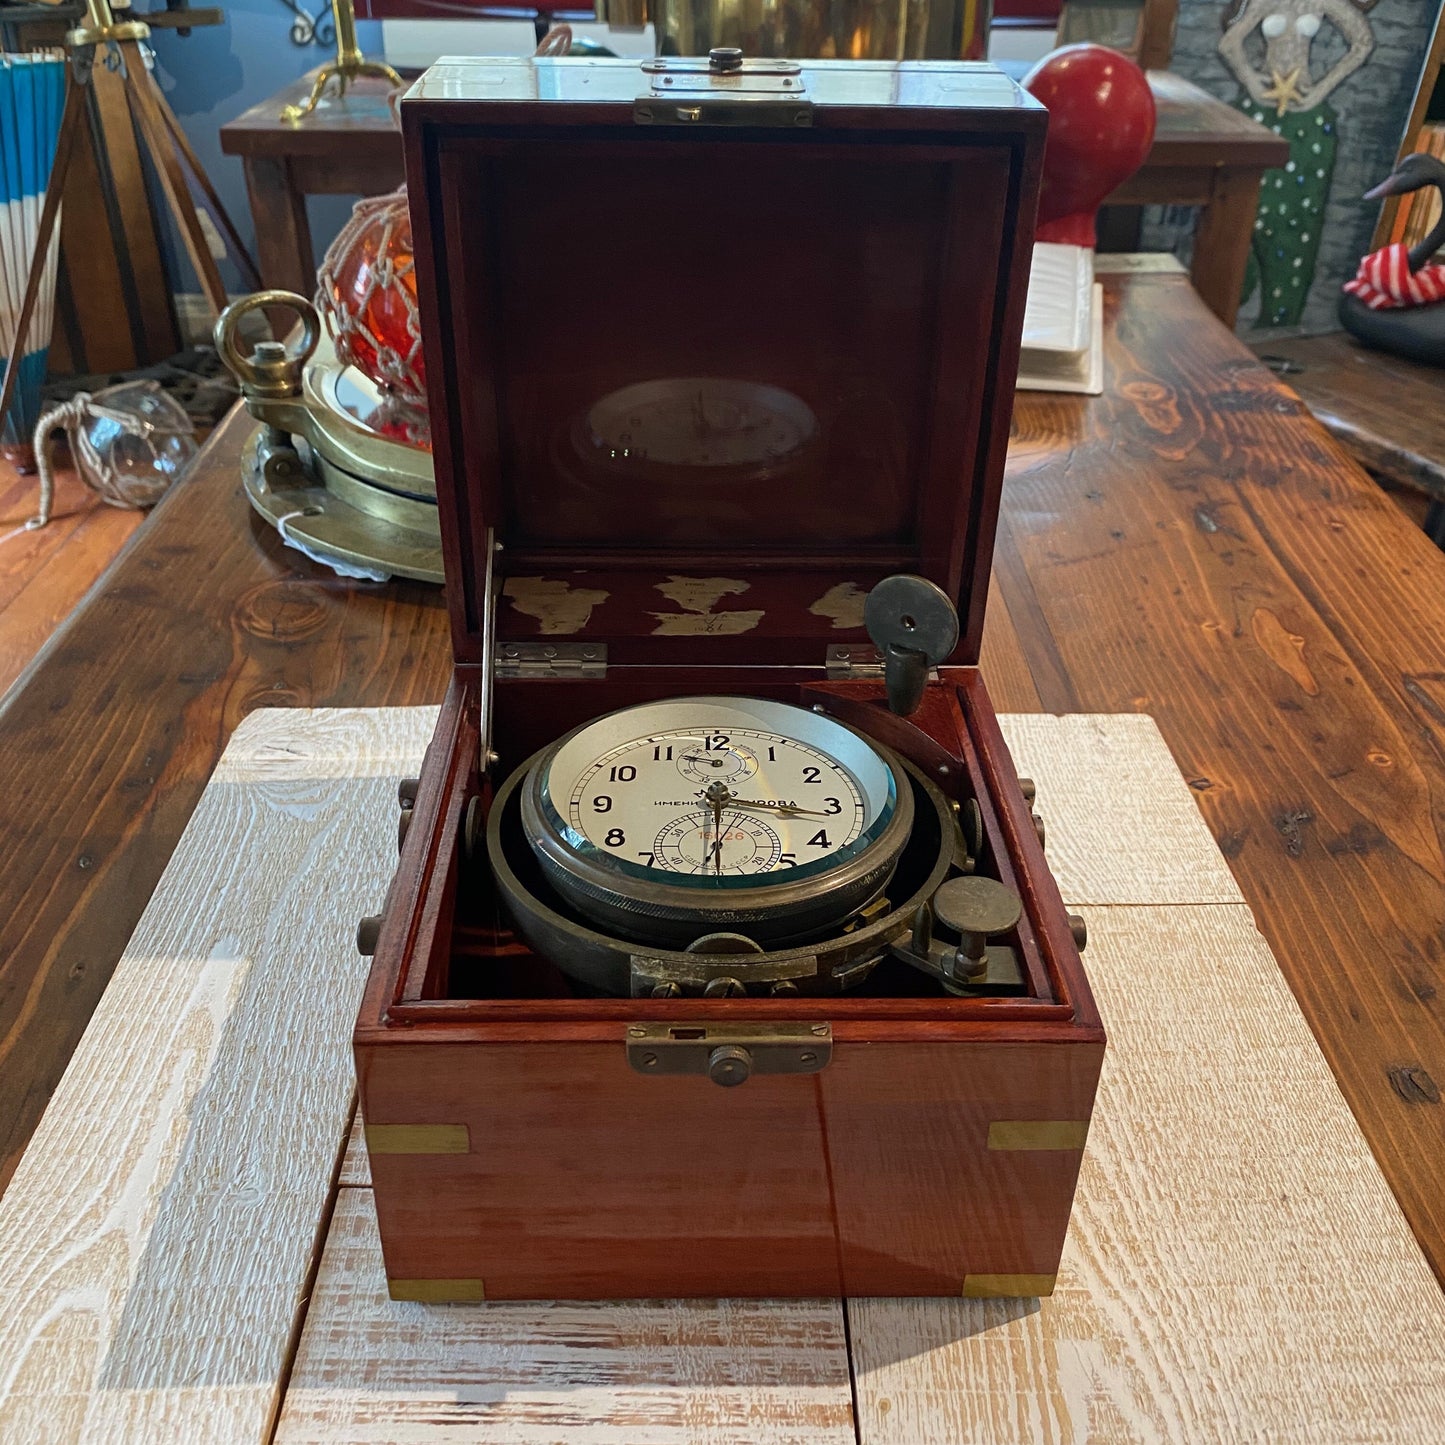 Russian Marine Chronometer - Annapolis Maritime Antiques